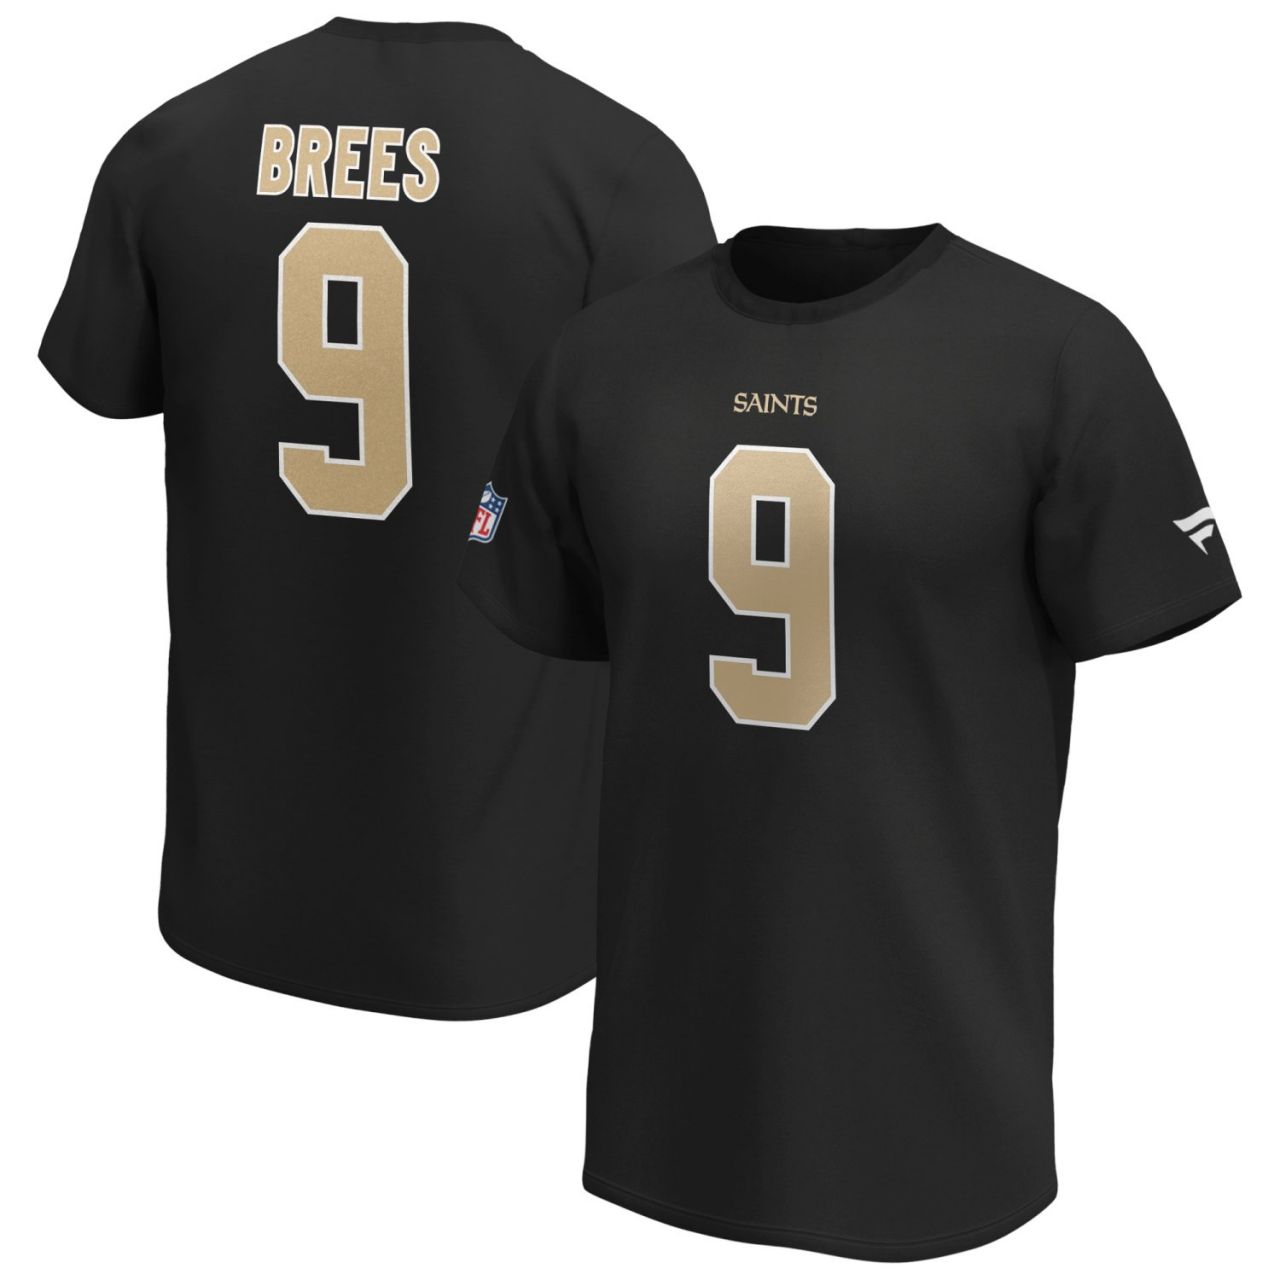 amfoo - New Orleans Saints NFL Shirt #9 Drew Brees